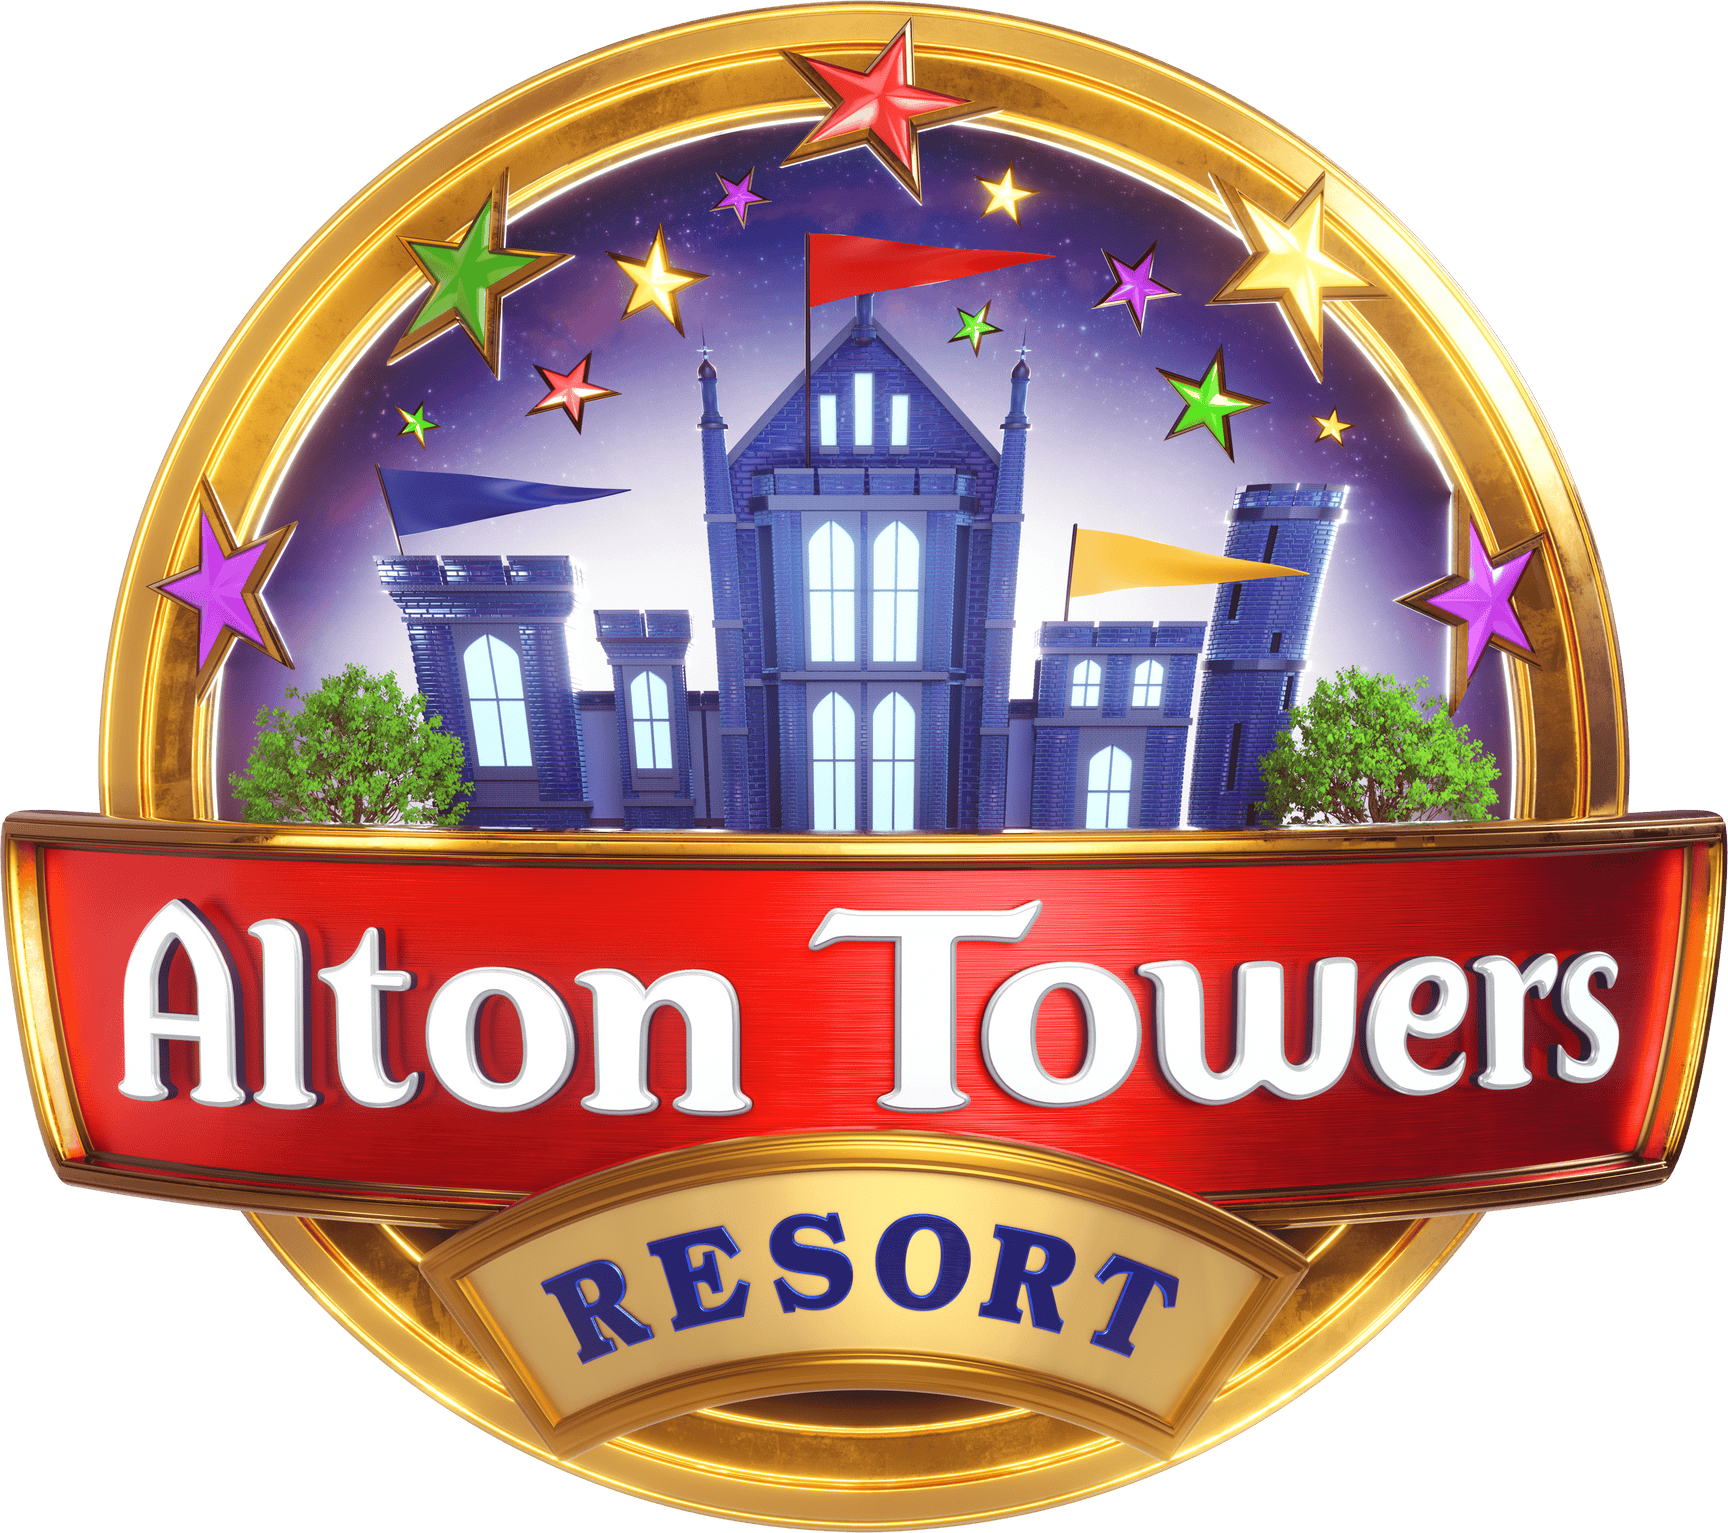 Merlin Annual Pass Alton Towers Resort Online Shop 